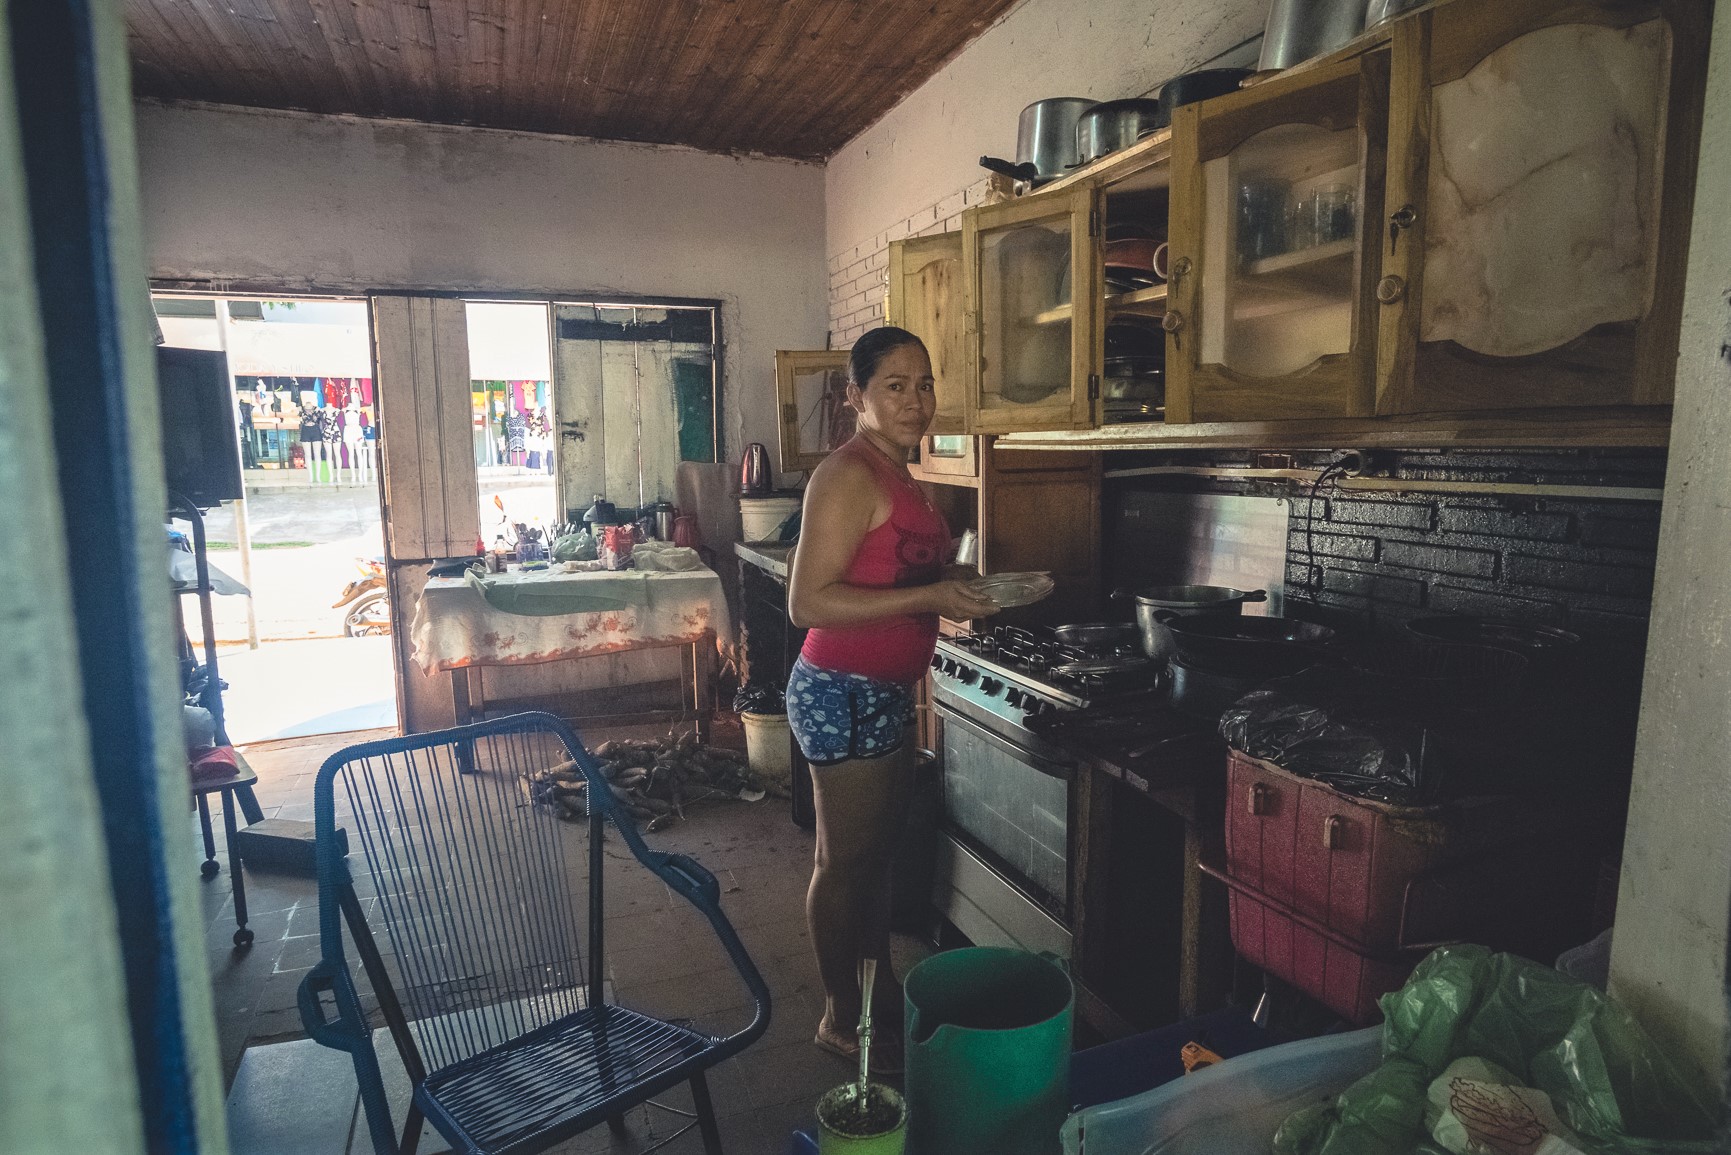 Comedor – Μια εικόνα ζωής από τη μακρινή Παραγουάη #13